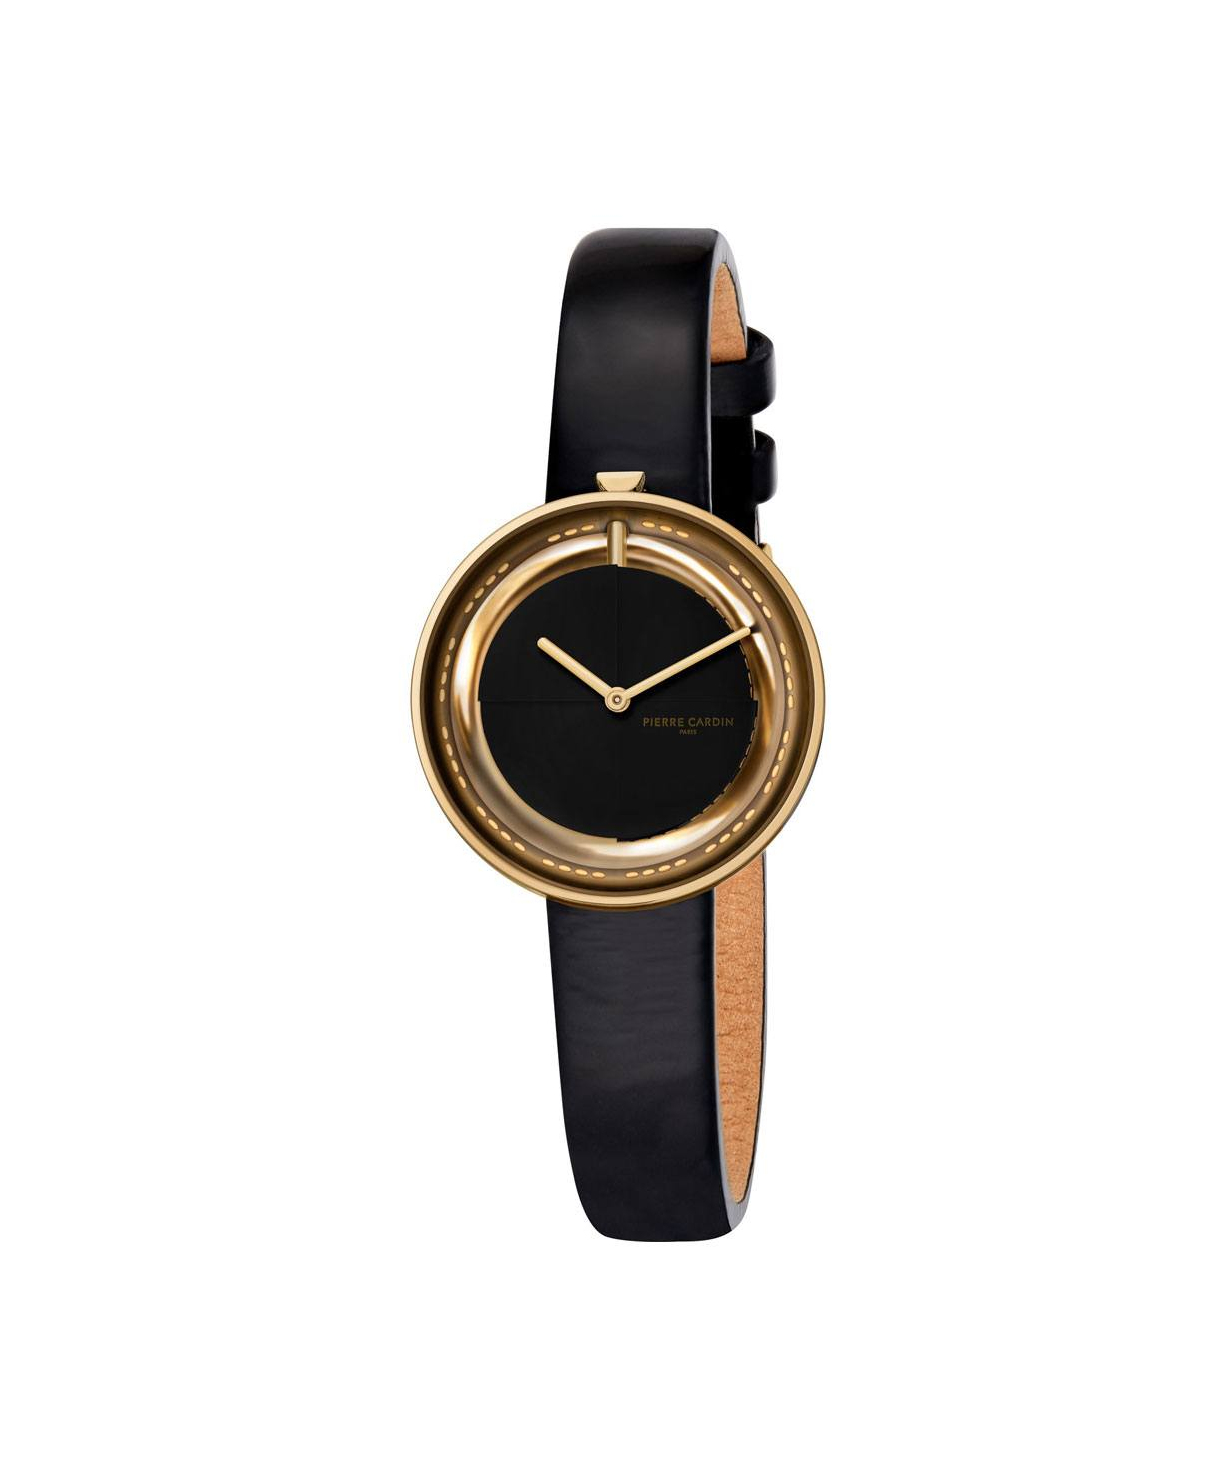 Ժամացույց  «Pierre Cardin» ձեռքի  CMA.0002